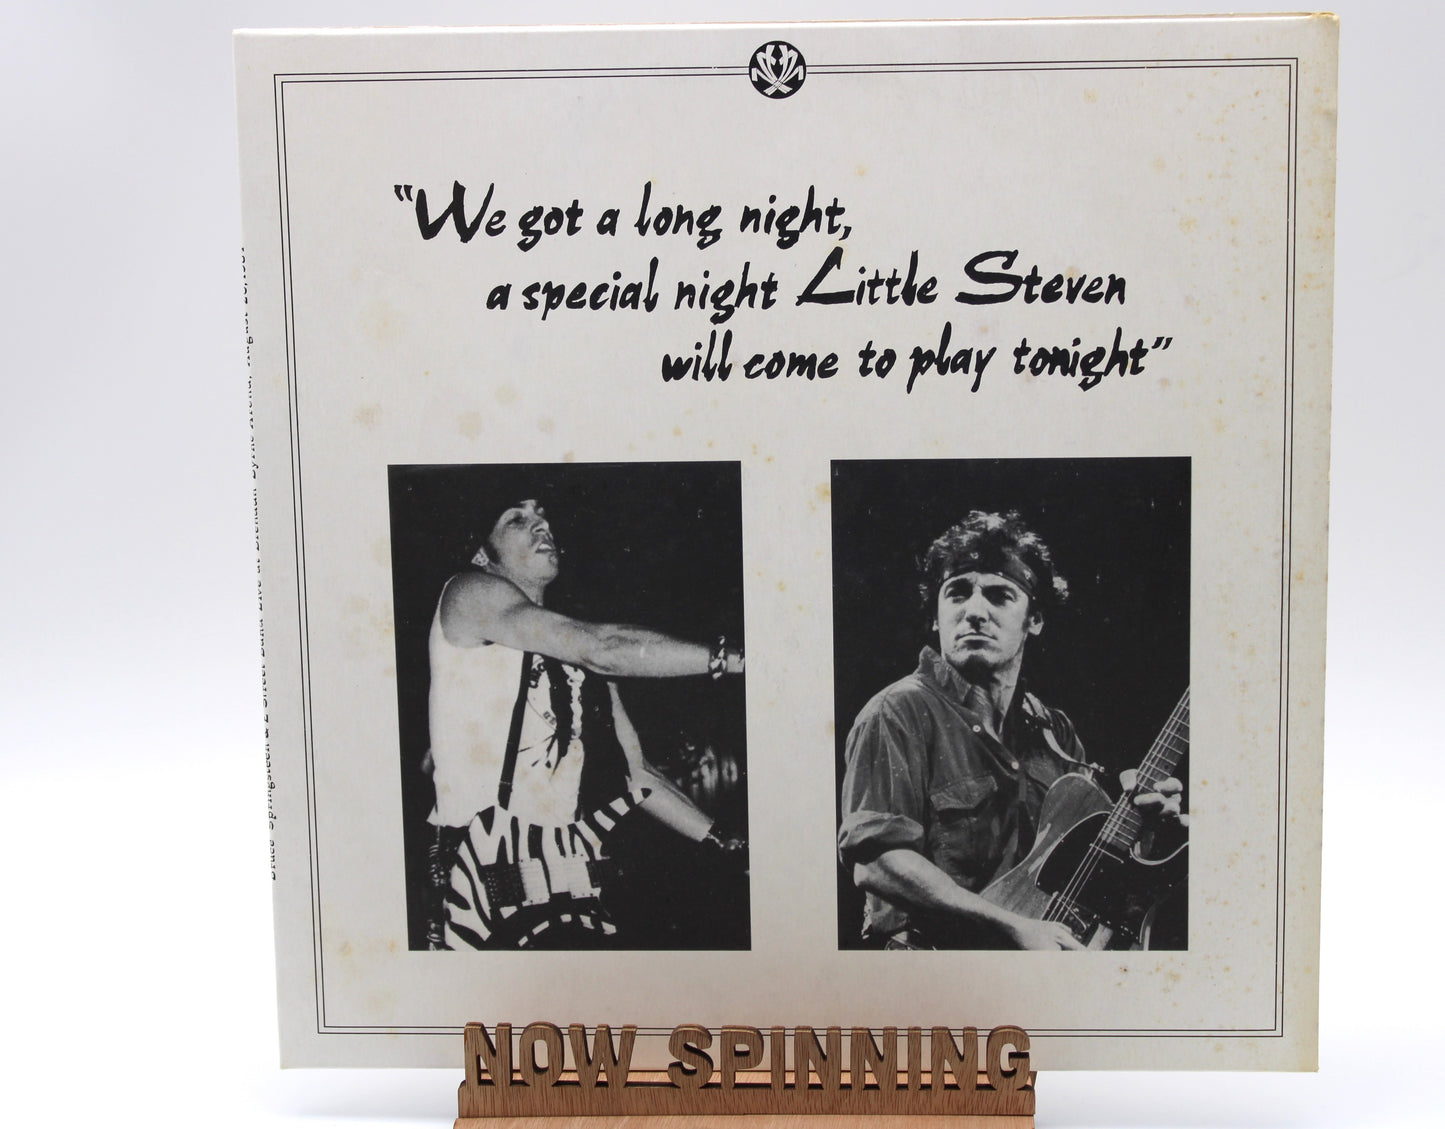 Bruce Springsteen - Unofficial Bootleg Vinyl LP - We Got A Long Night, Little Steven Will Come To Play